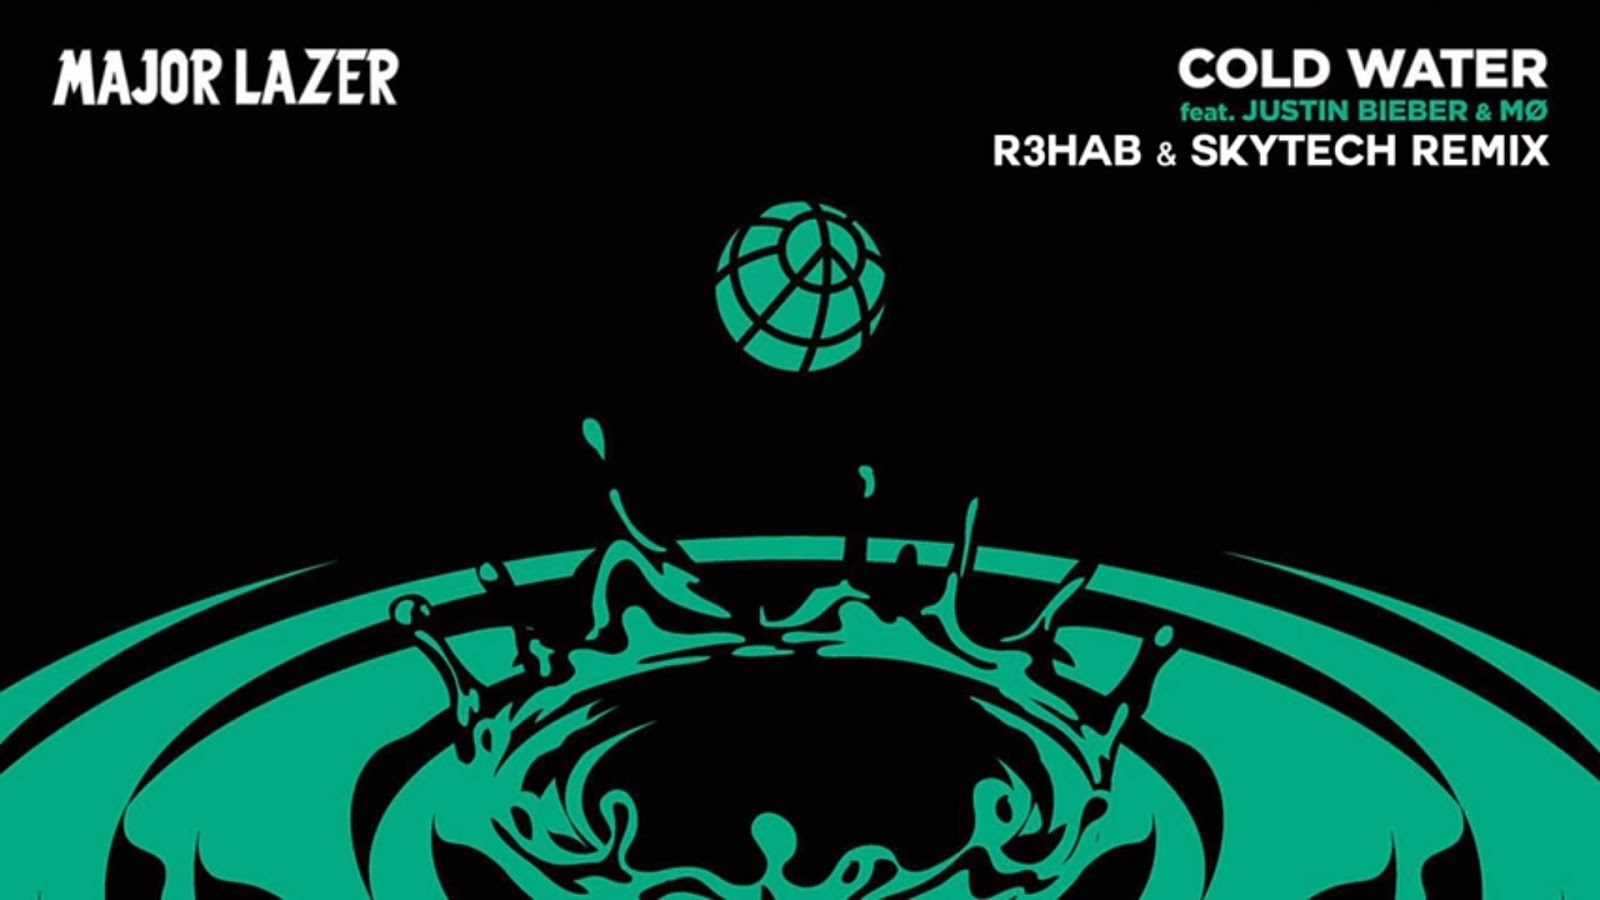 Major lazer remix. Major Lazer - Cold Water (feat. Justin Bieber & MØ). Cold Water Major Lazer. R3hab vs. Skytech. R3hab Afrojack.